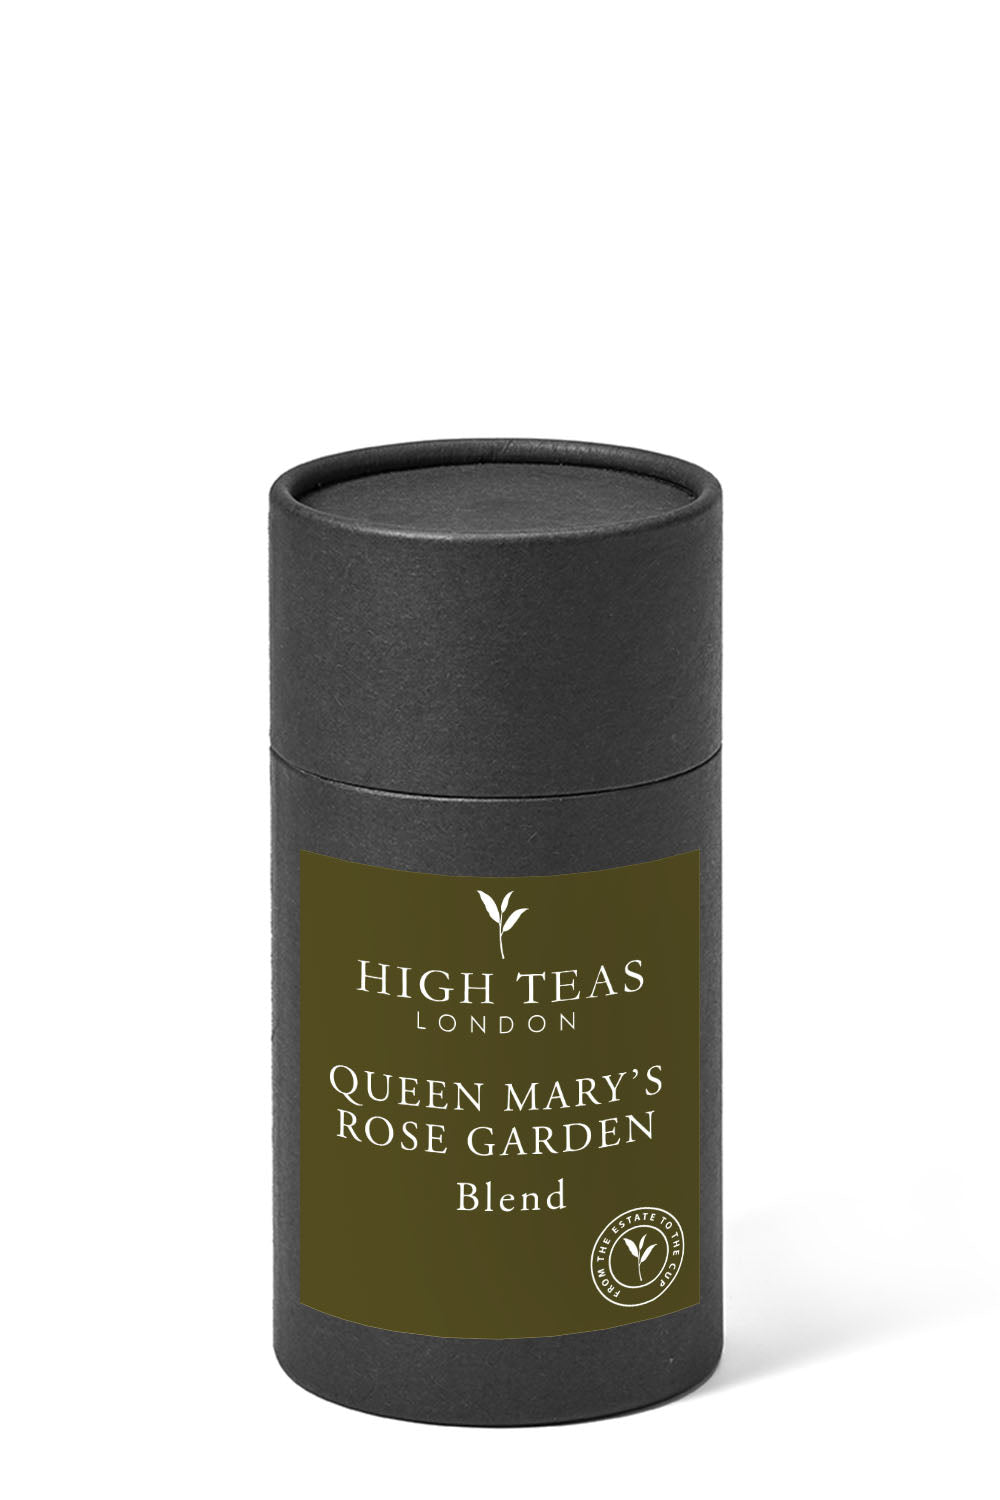 Queen Mary's Rose Garden-60g gift-Loose Leaf Tea-High Teas